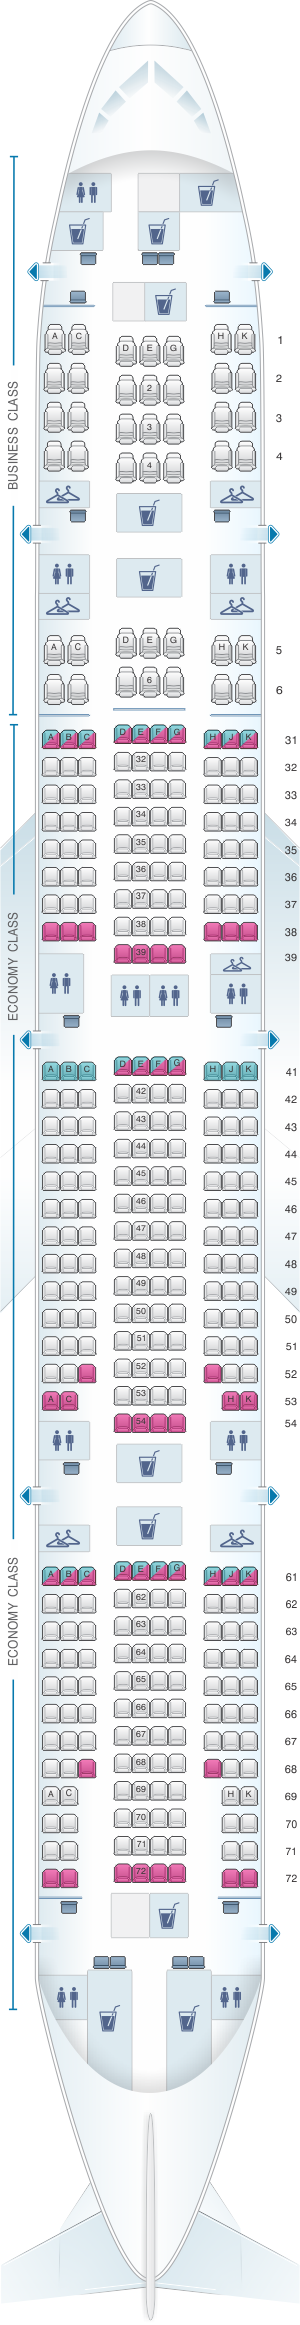 Pal 747 Seating Chart